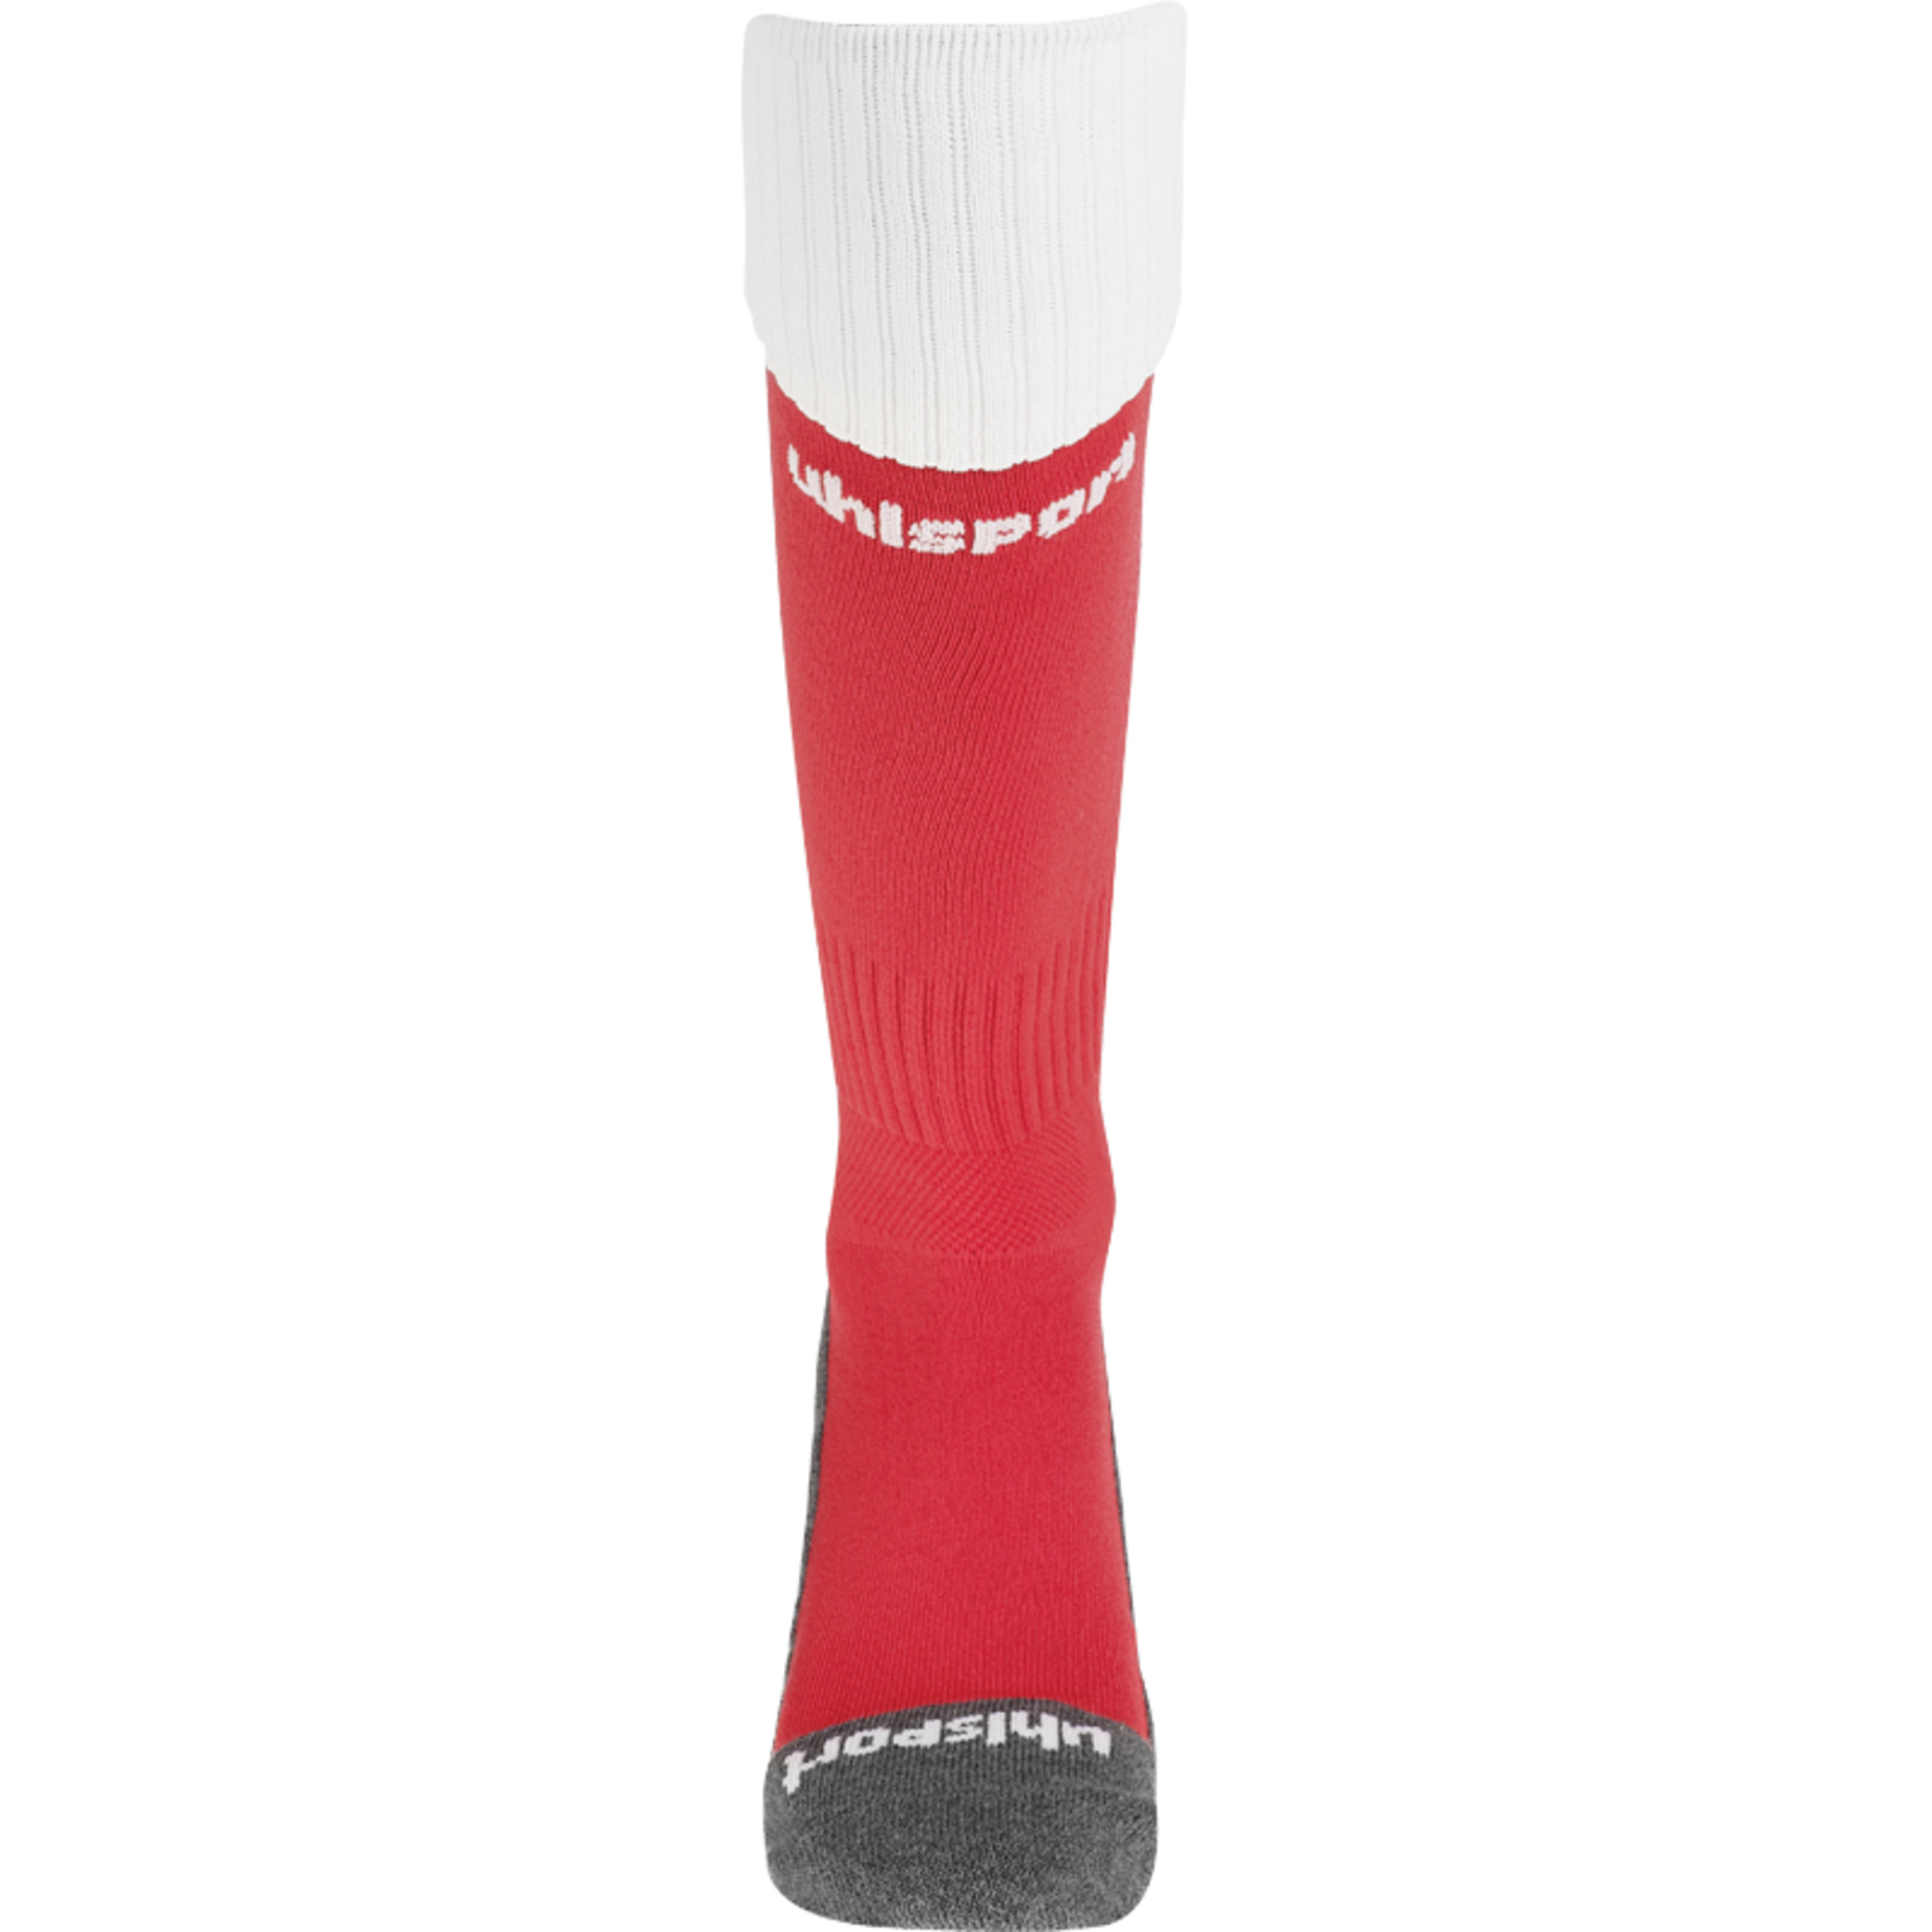 Club Socks Rojo/blanco Uhlsport